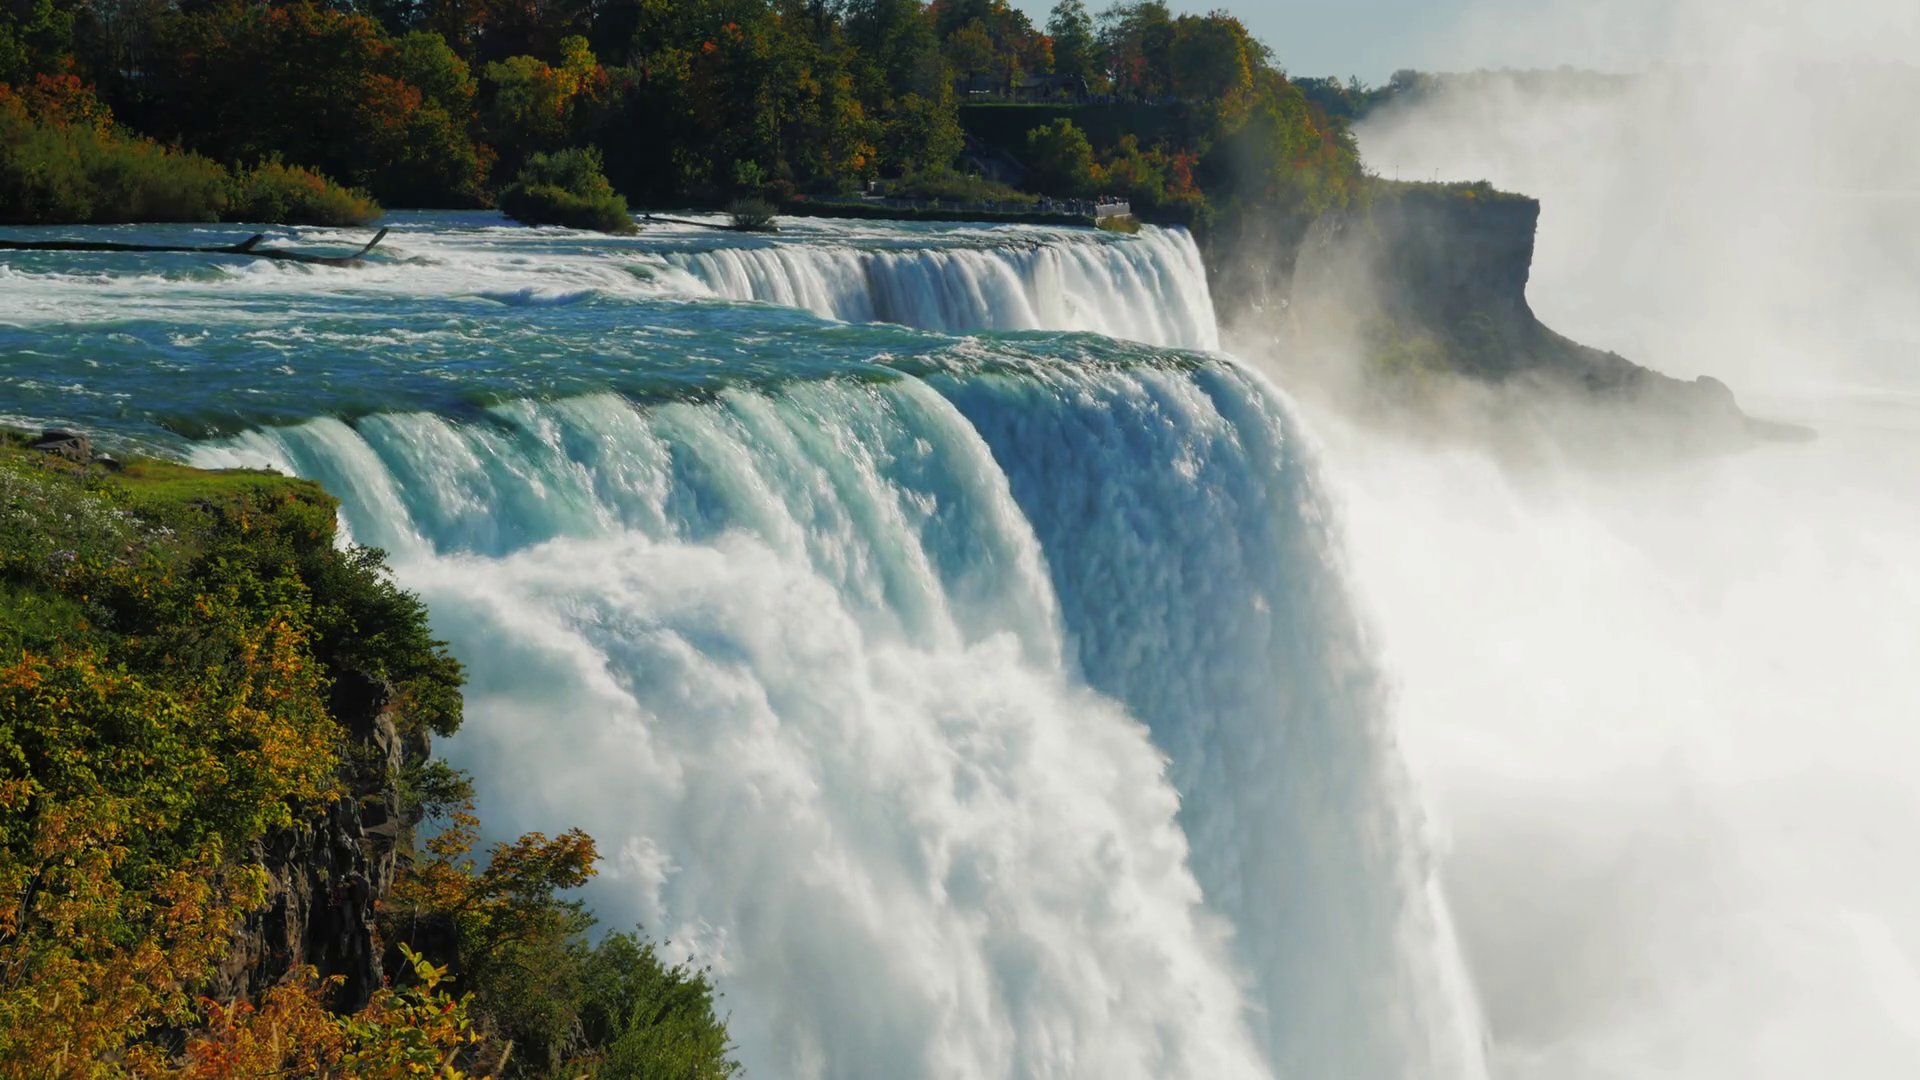 The famous waterfall Niagara Falls, a popular spot among tourists ...